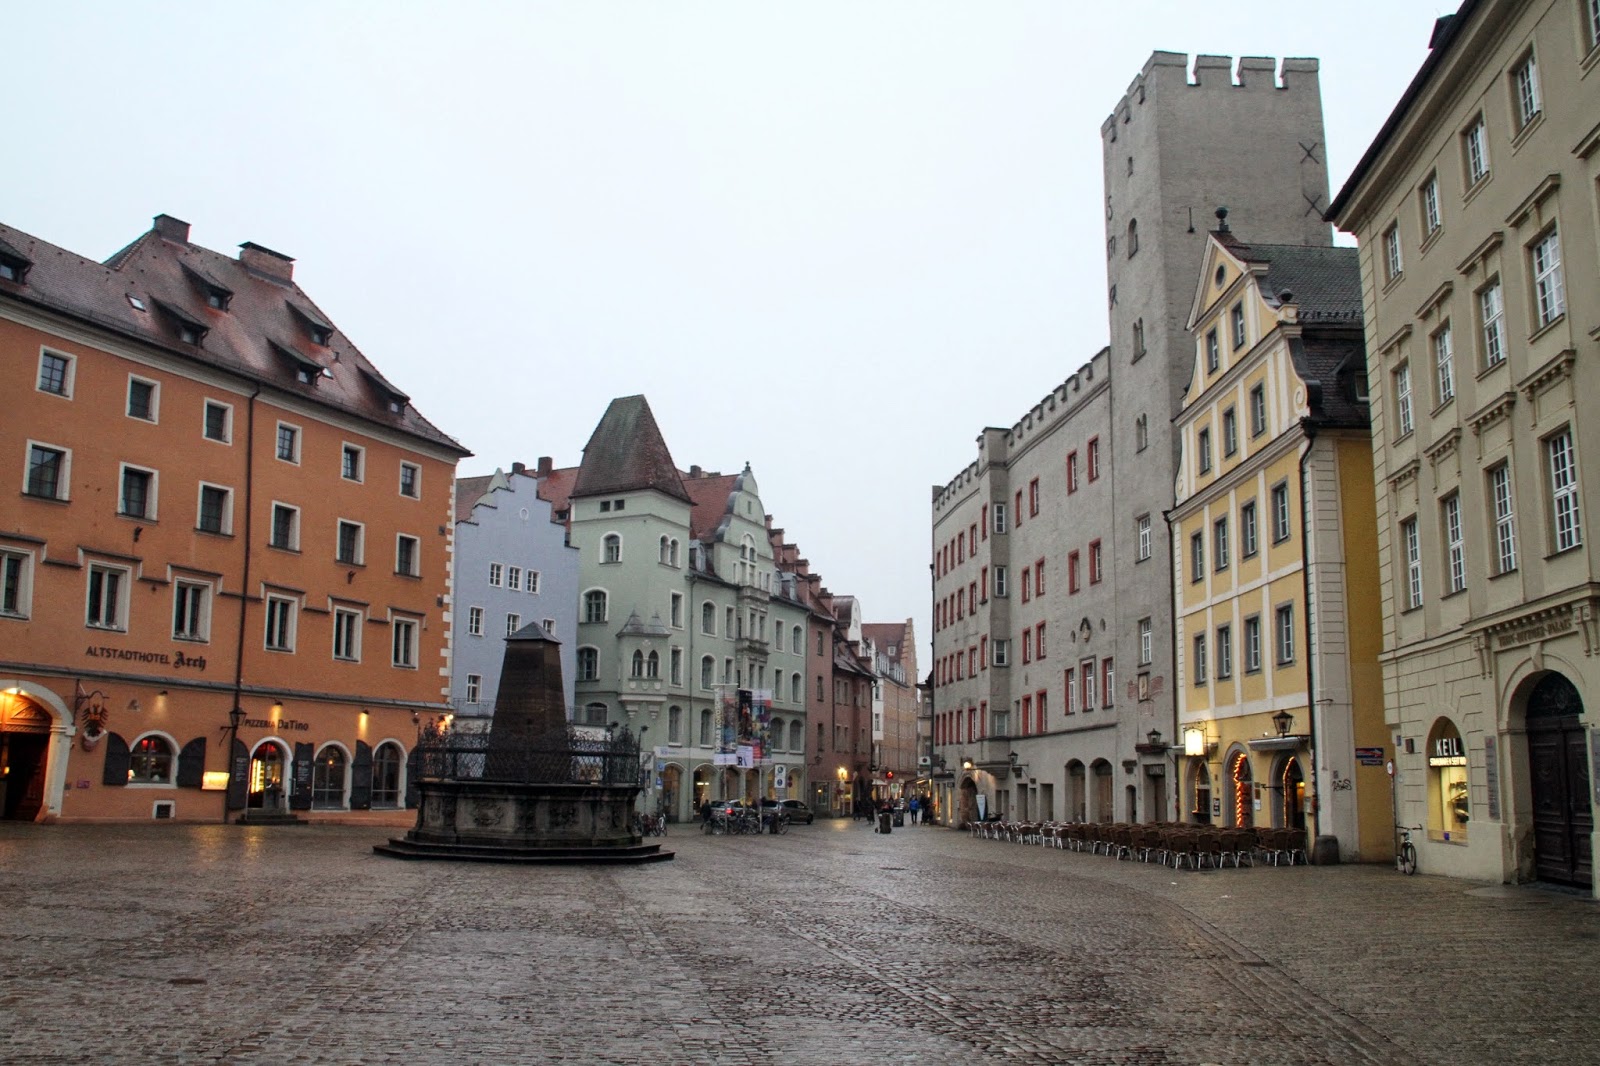 PAU'S PHOTO: Old town of Regensburg